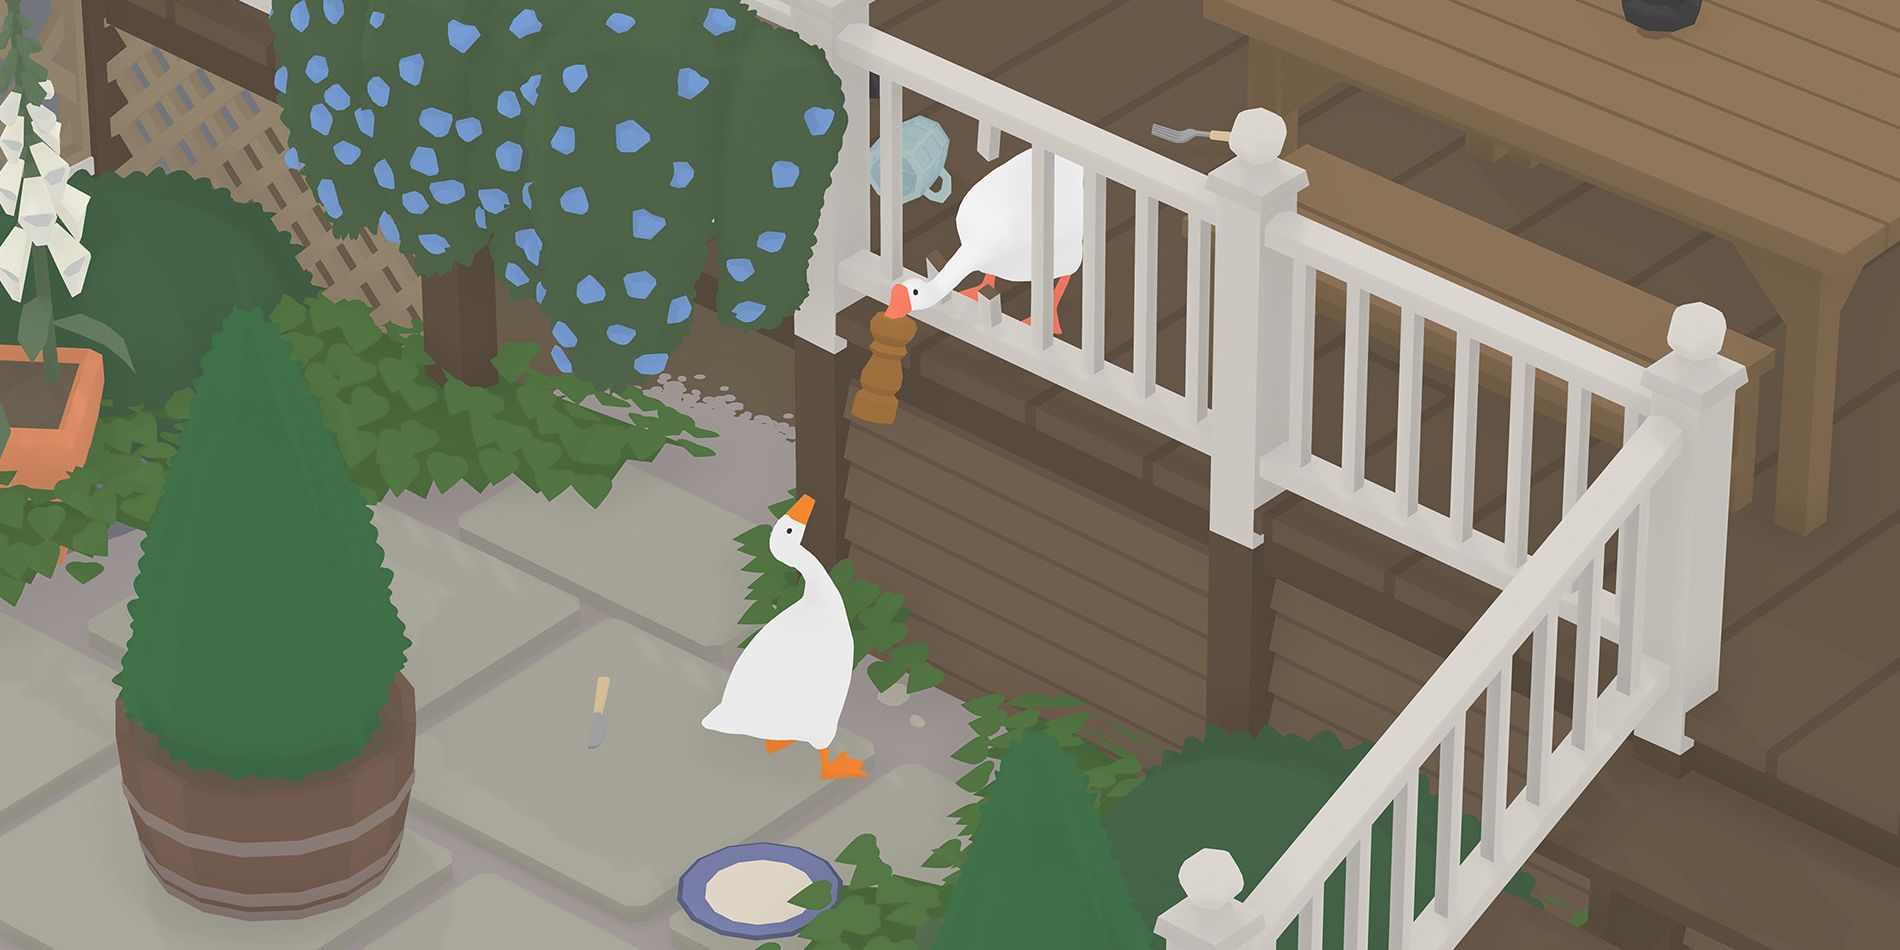 Untitled Goose Game receberá multiplayer local e chegará no Steam